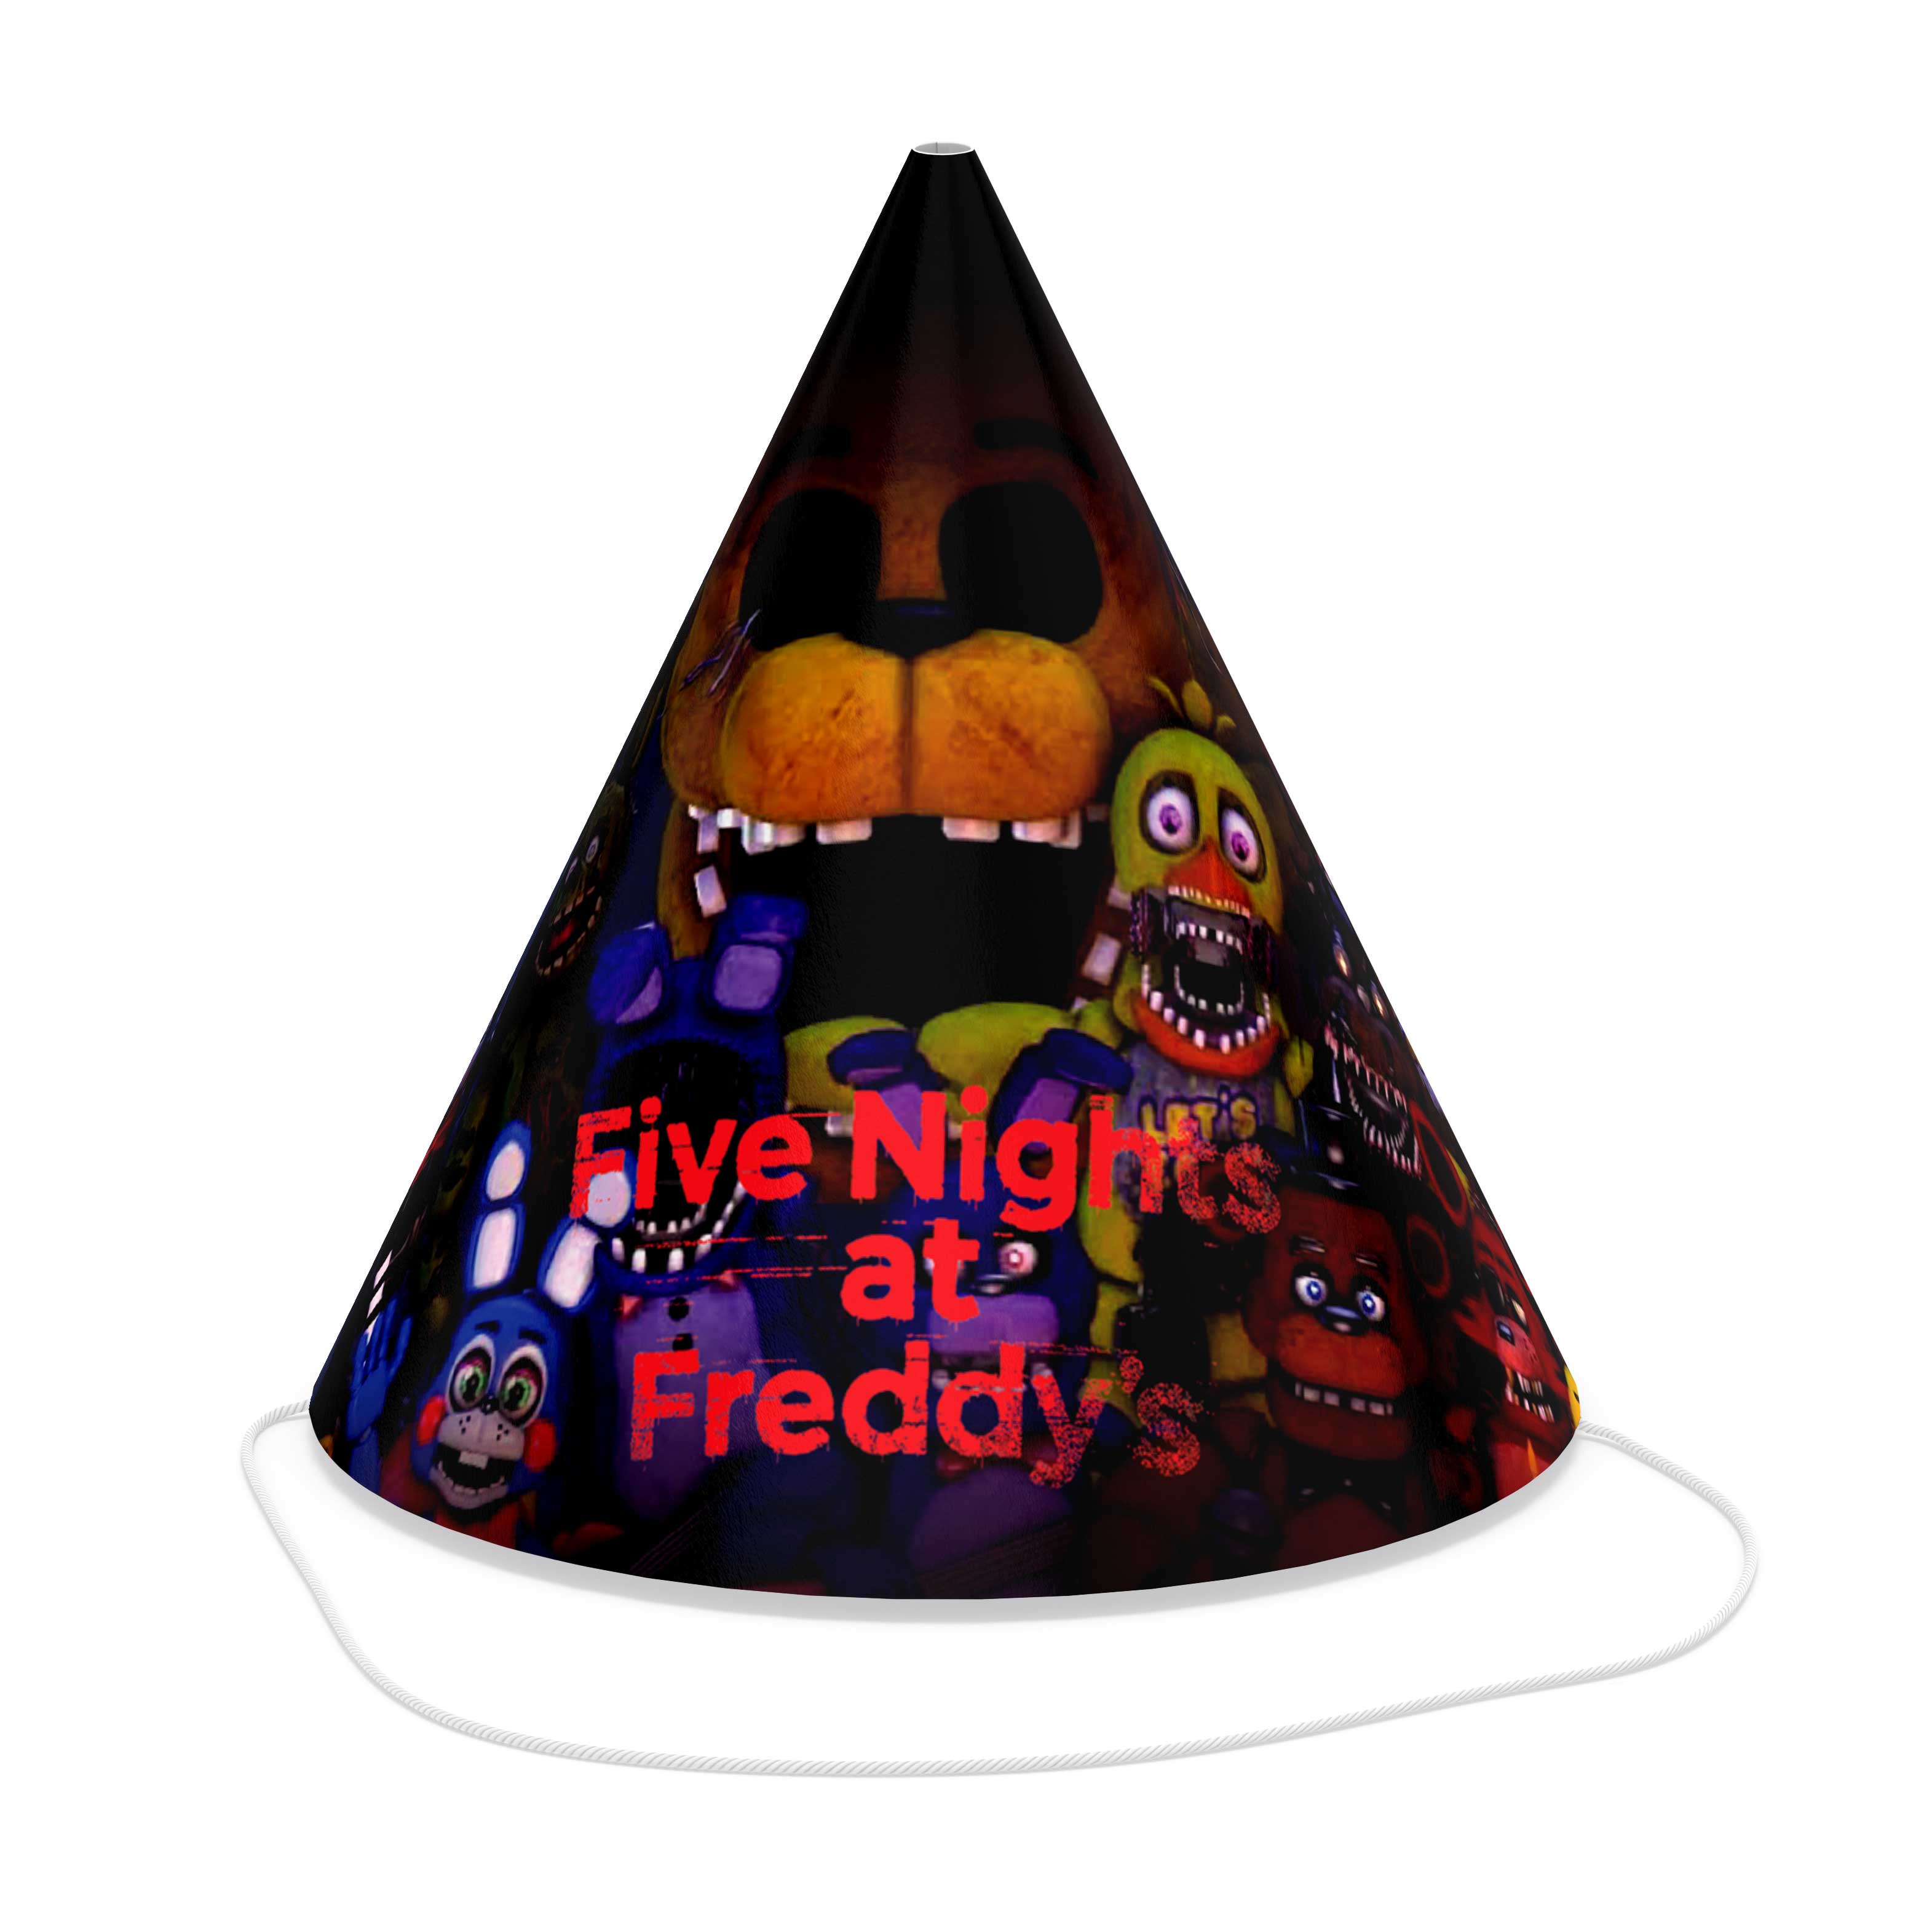 Preços baixos em Five Nights at Freddy's chapéus de jogos de vídeo